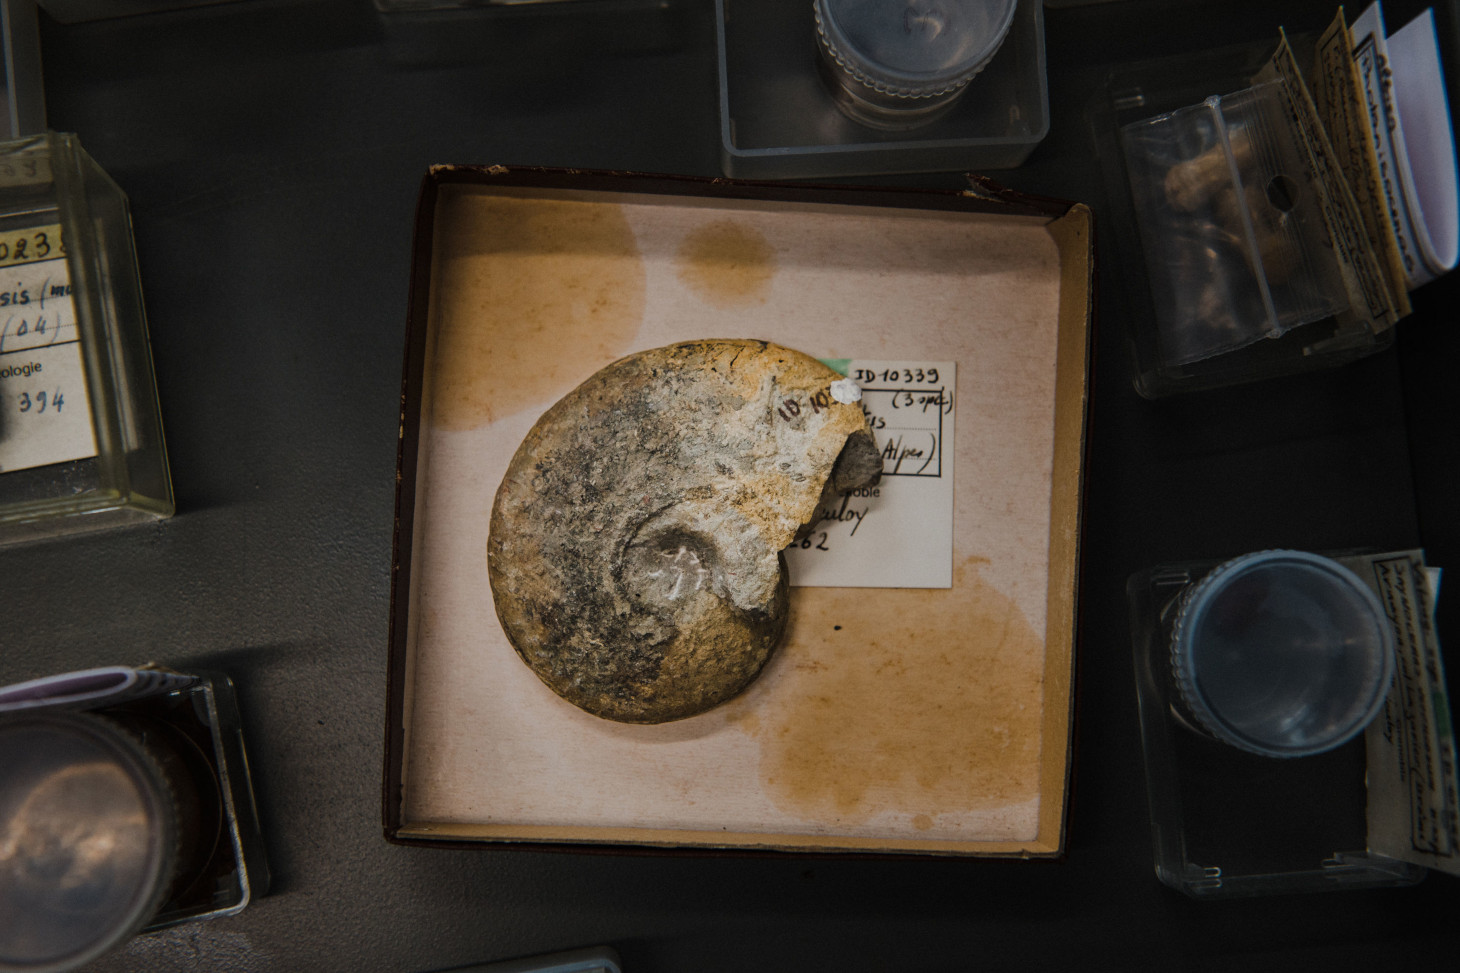 Fossile de la collection de géologie - OSUG / UGA © Simon Cavalier